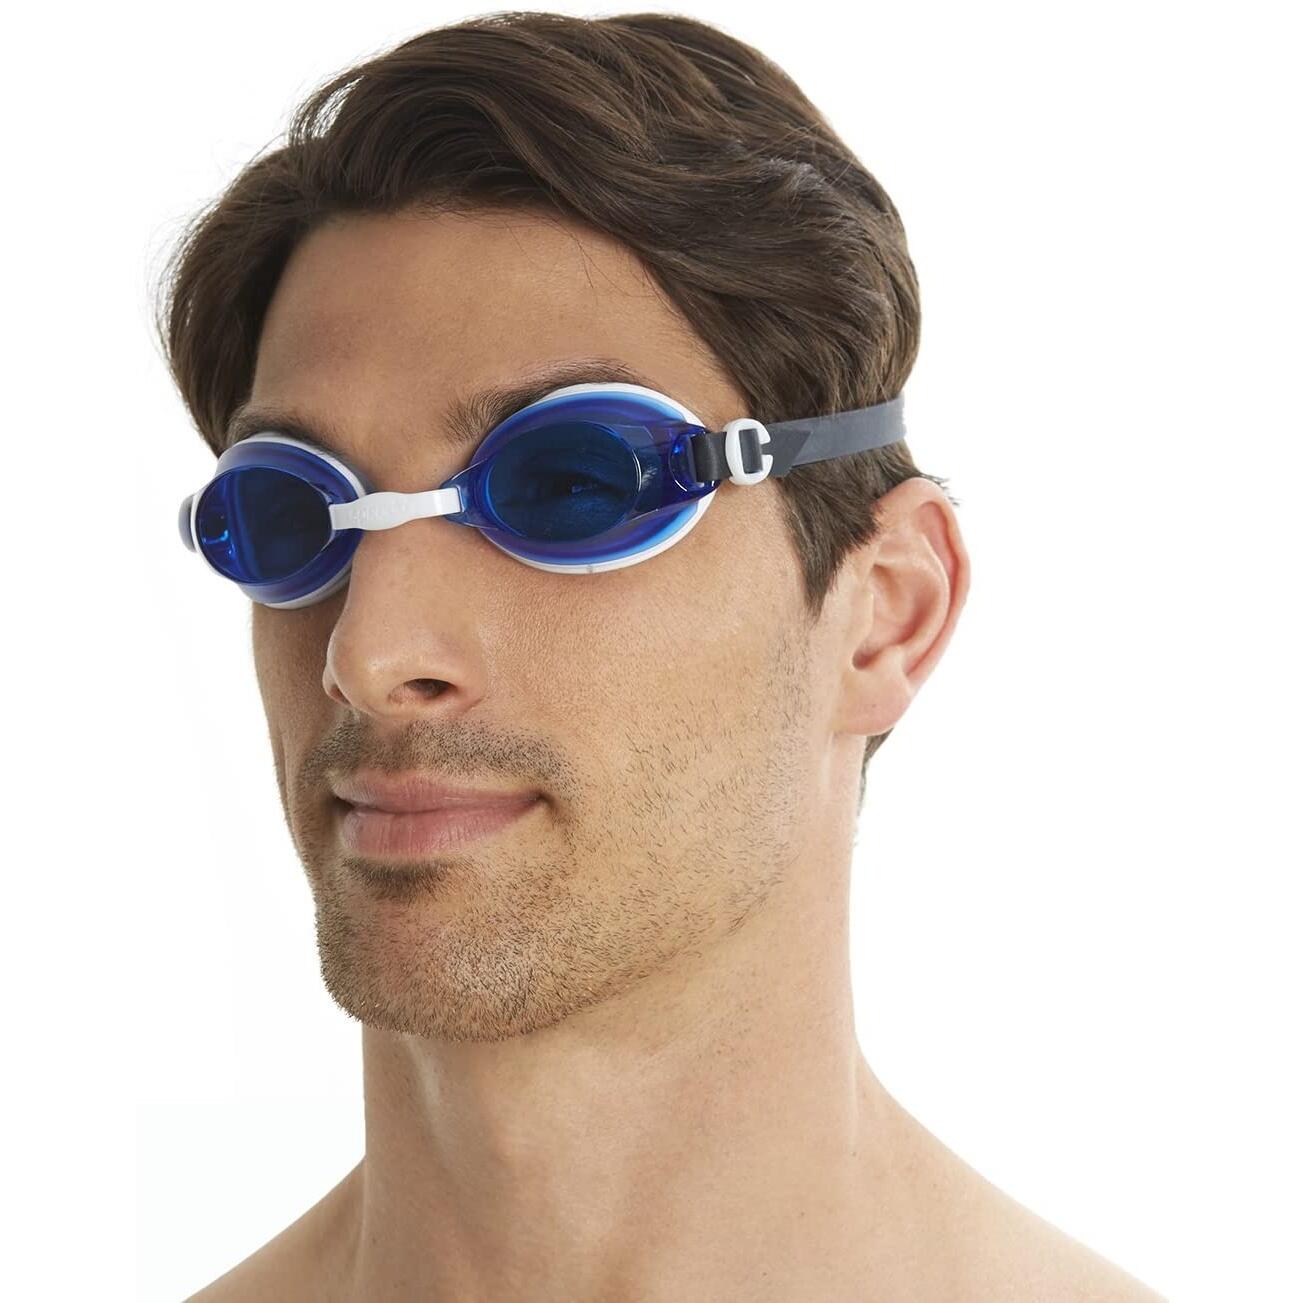 Unisex Adult Jet Swimming Goggles (Blue/White) 3/4